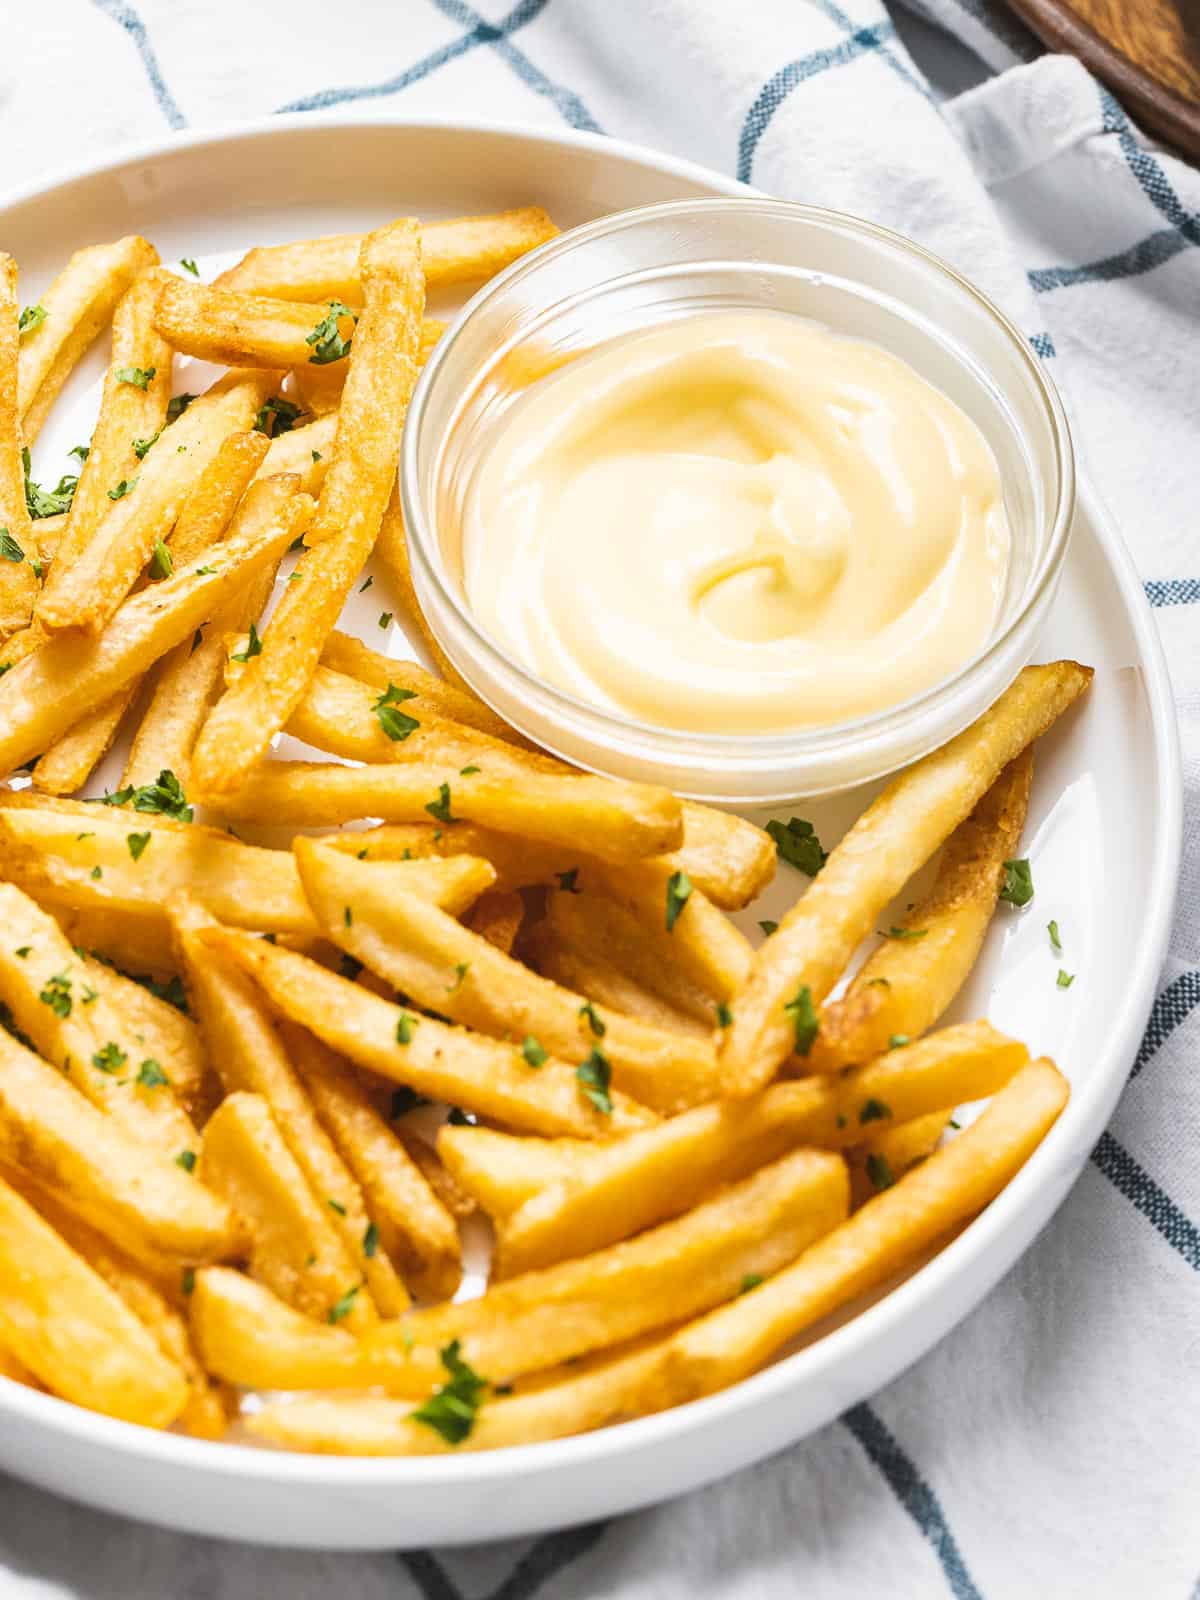 Garlic Aioli next to French fries.